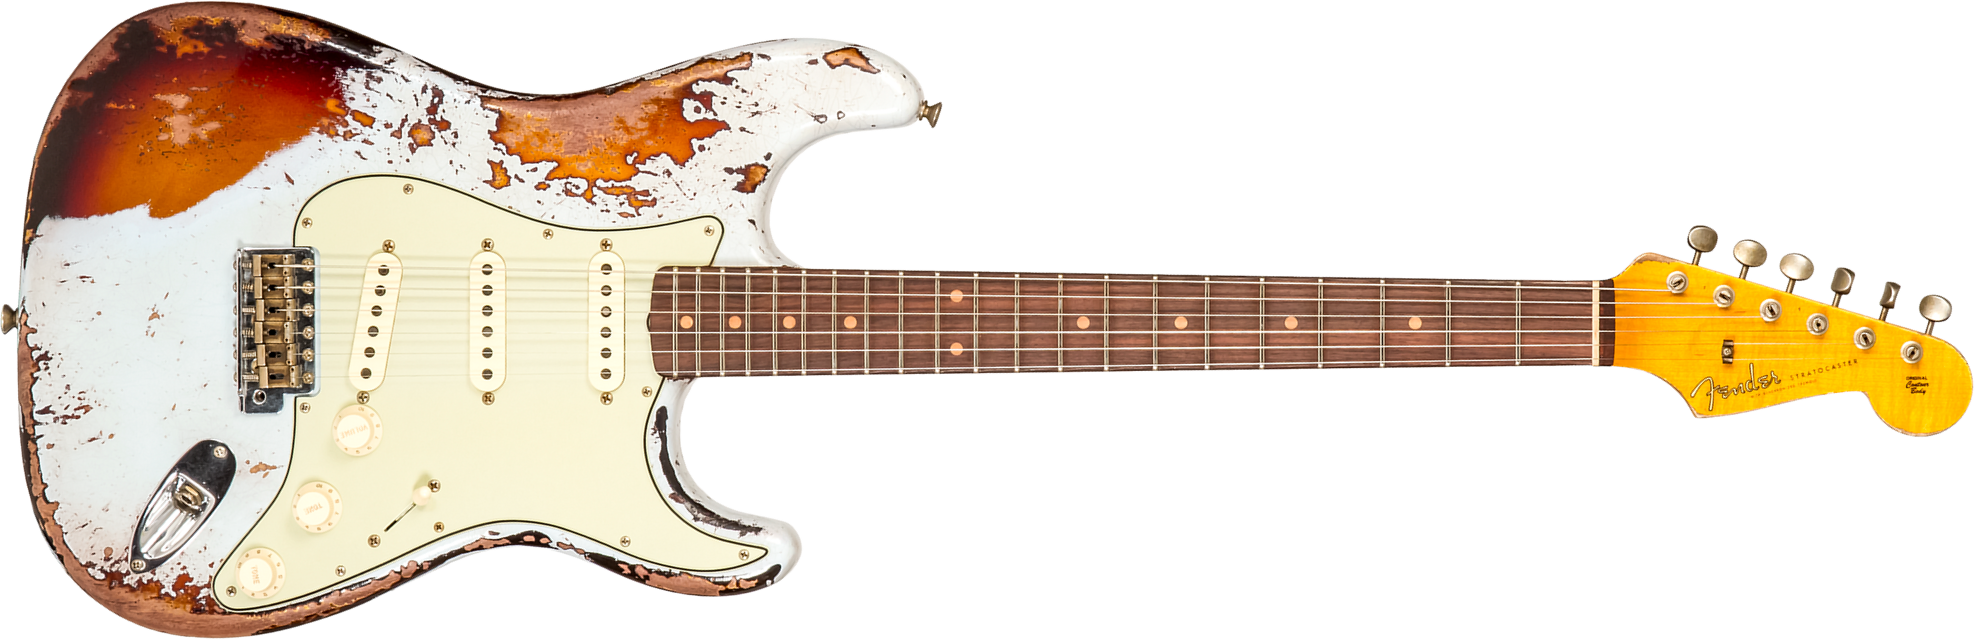 Fender Custom Shop Strat 1959 3s Trem Rw #cz576124 - Super Heavy Relic Sonic Blue O. Chocolate Sunburst - Guitarra eléctrica con forma de str. - Main 